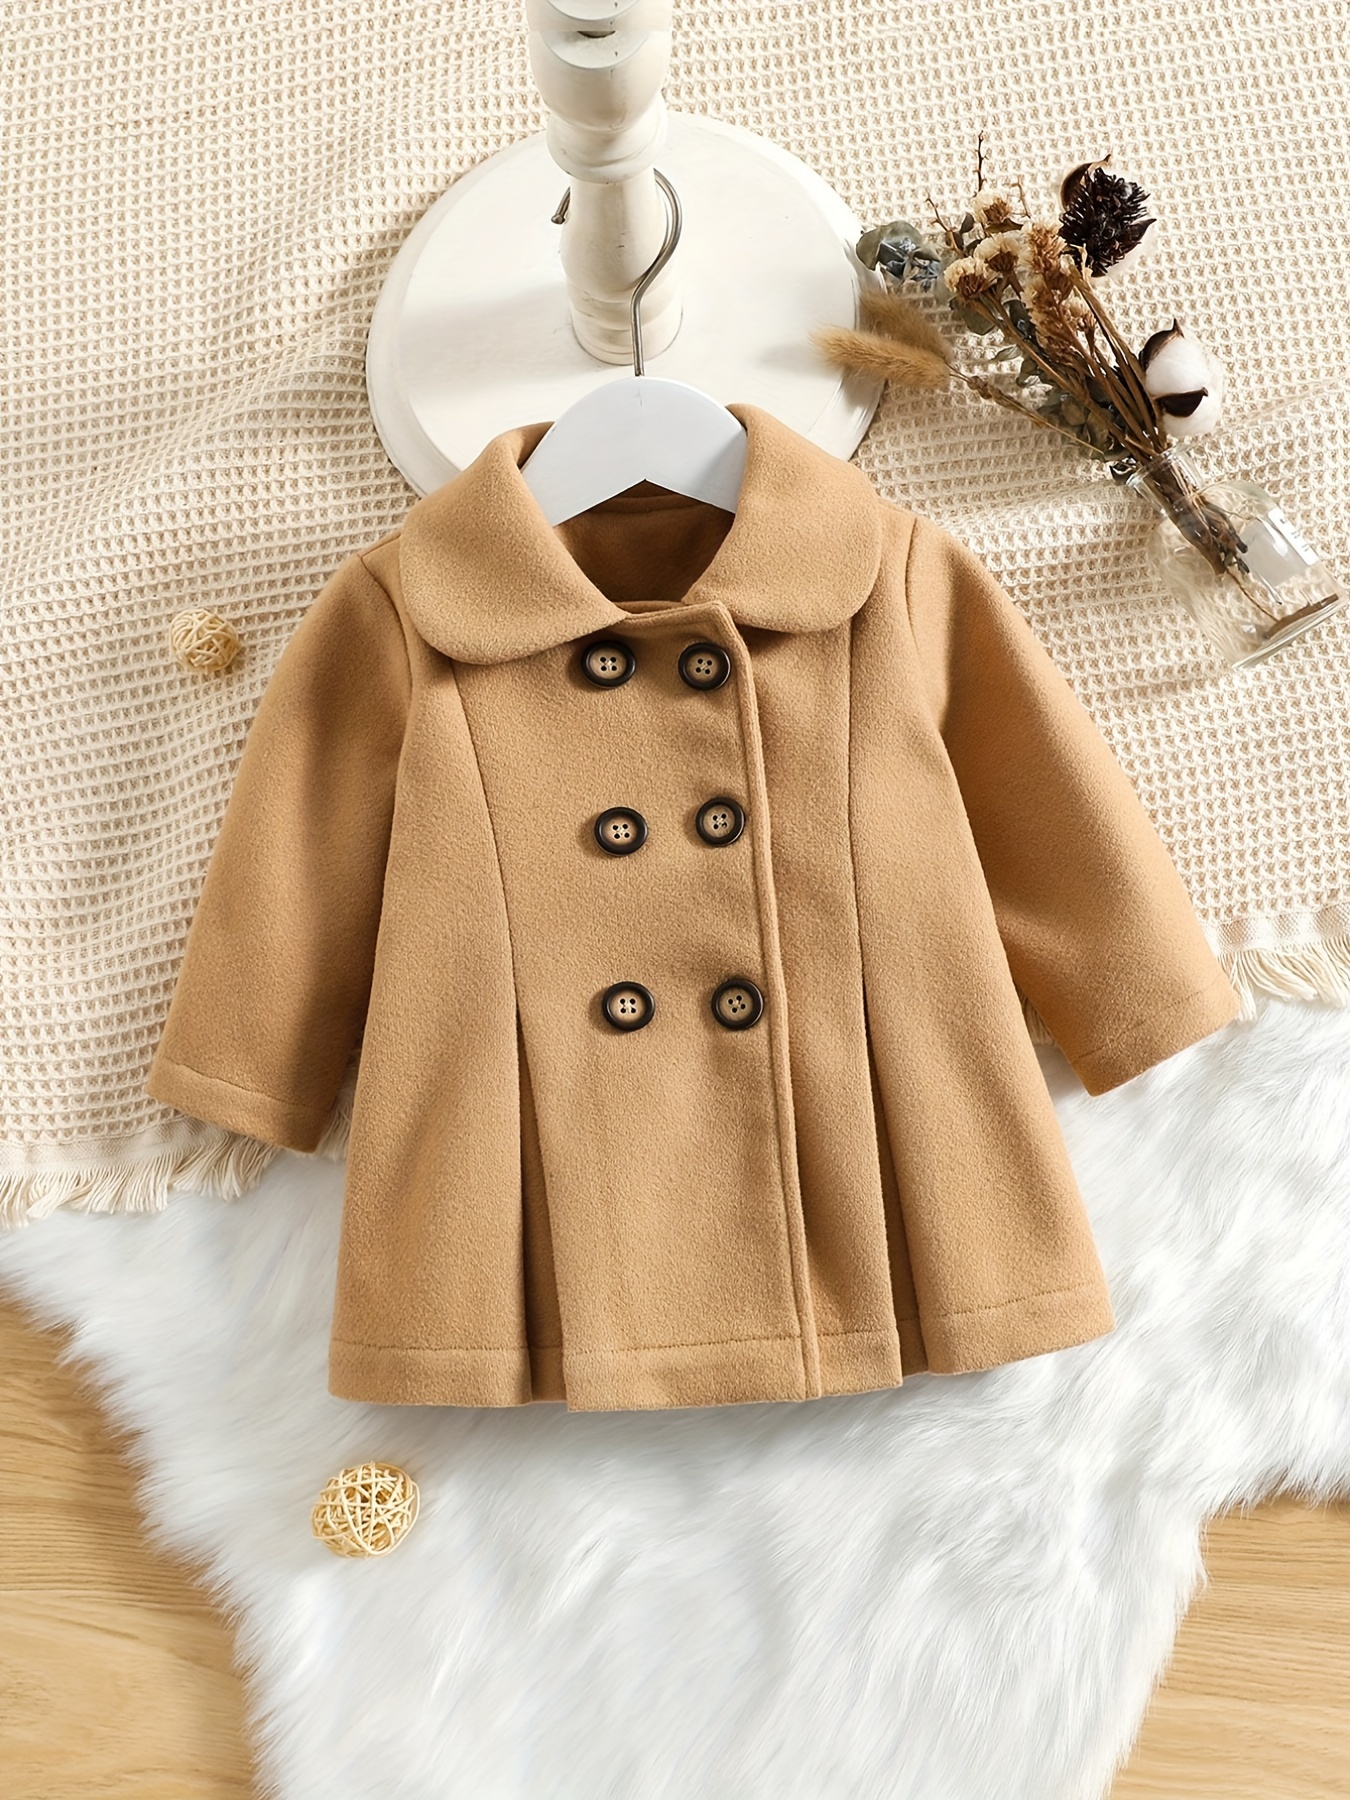 Tarmeek Toddler Baby Girl Boys Wool Coat Fall Winter Jacket Coat